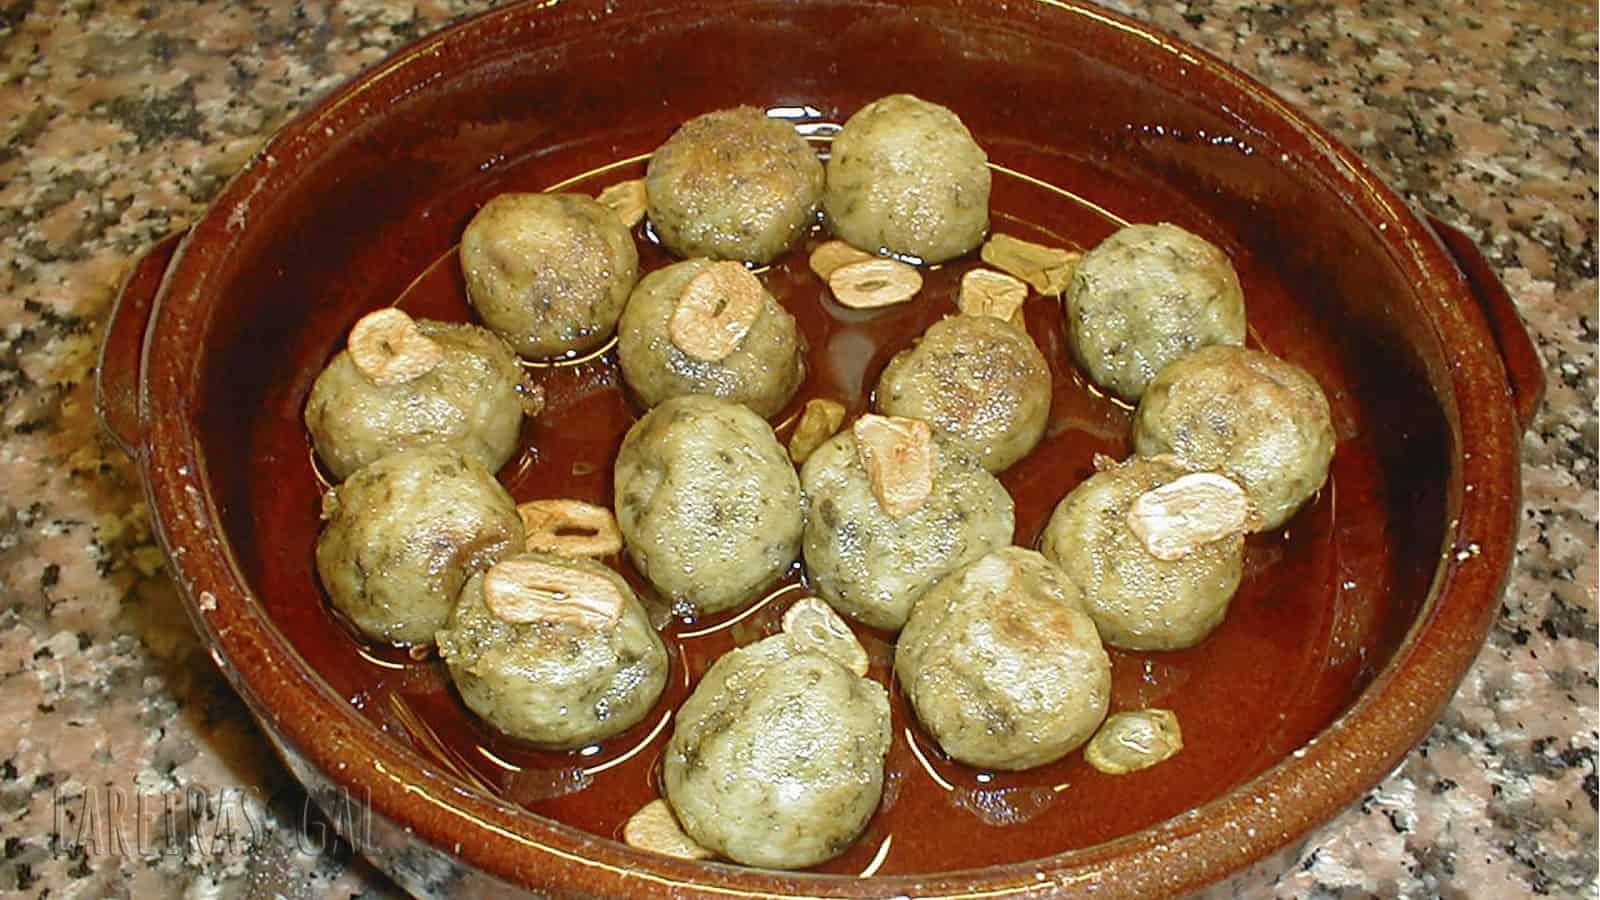 Turnip greens dumplings with garlic